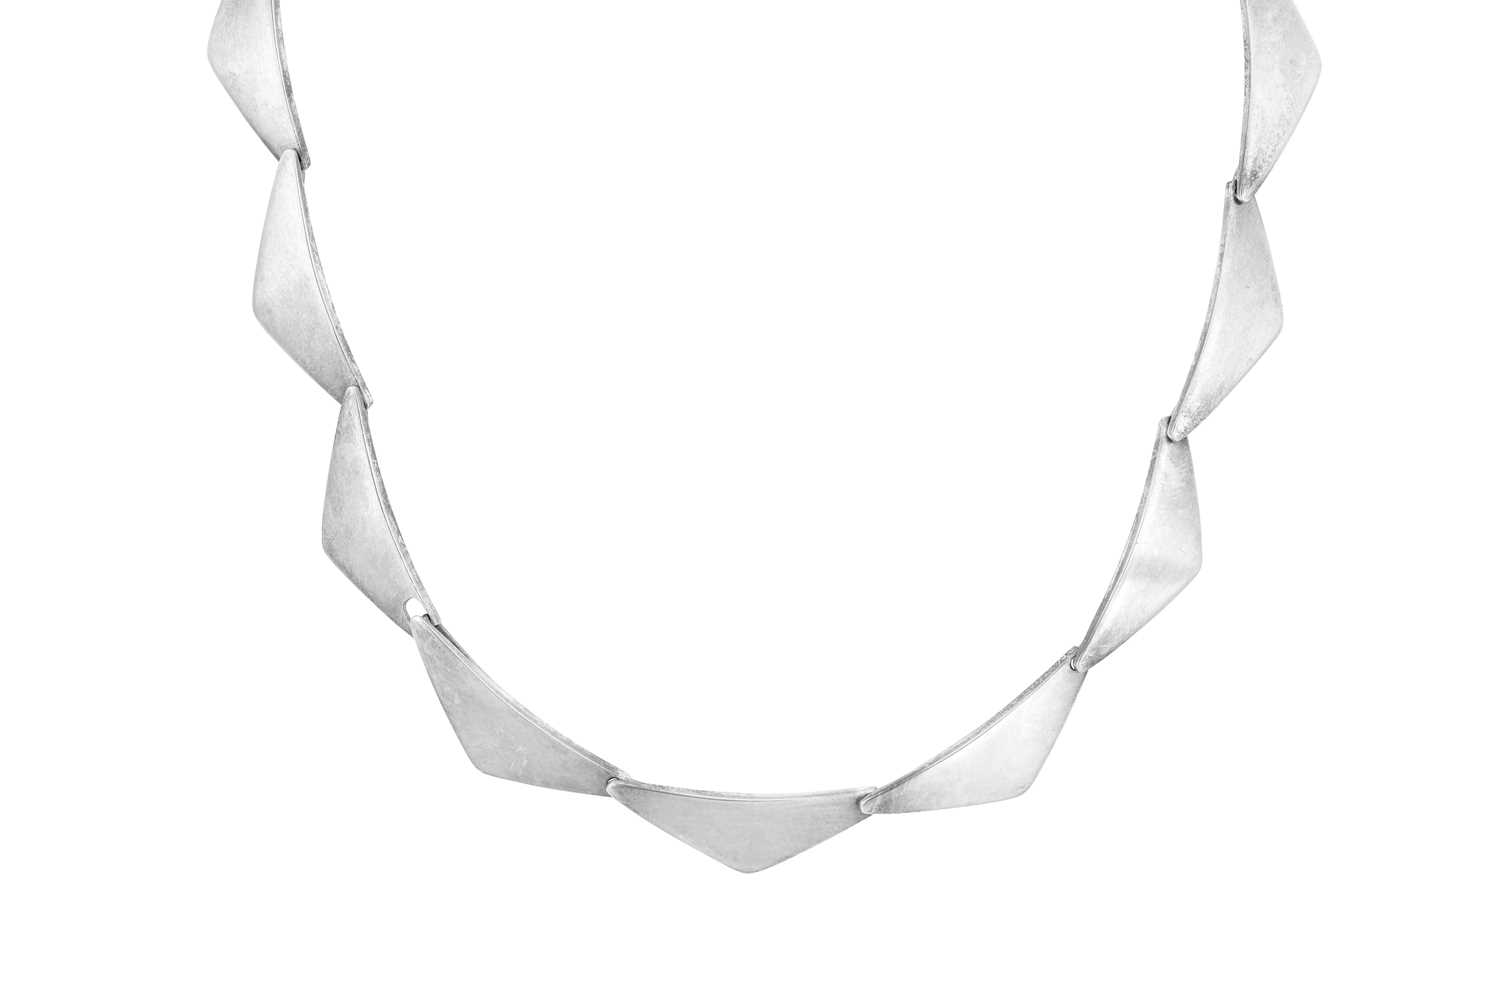 A 'Peak' Necklace, by Georg Jensen formed of thirteen white plain polished triangular peak motifs